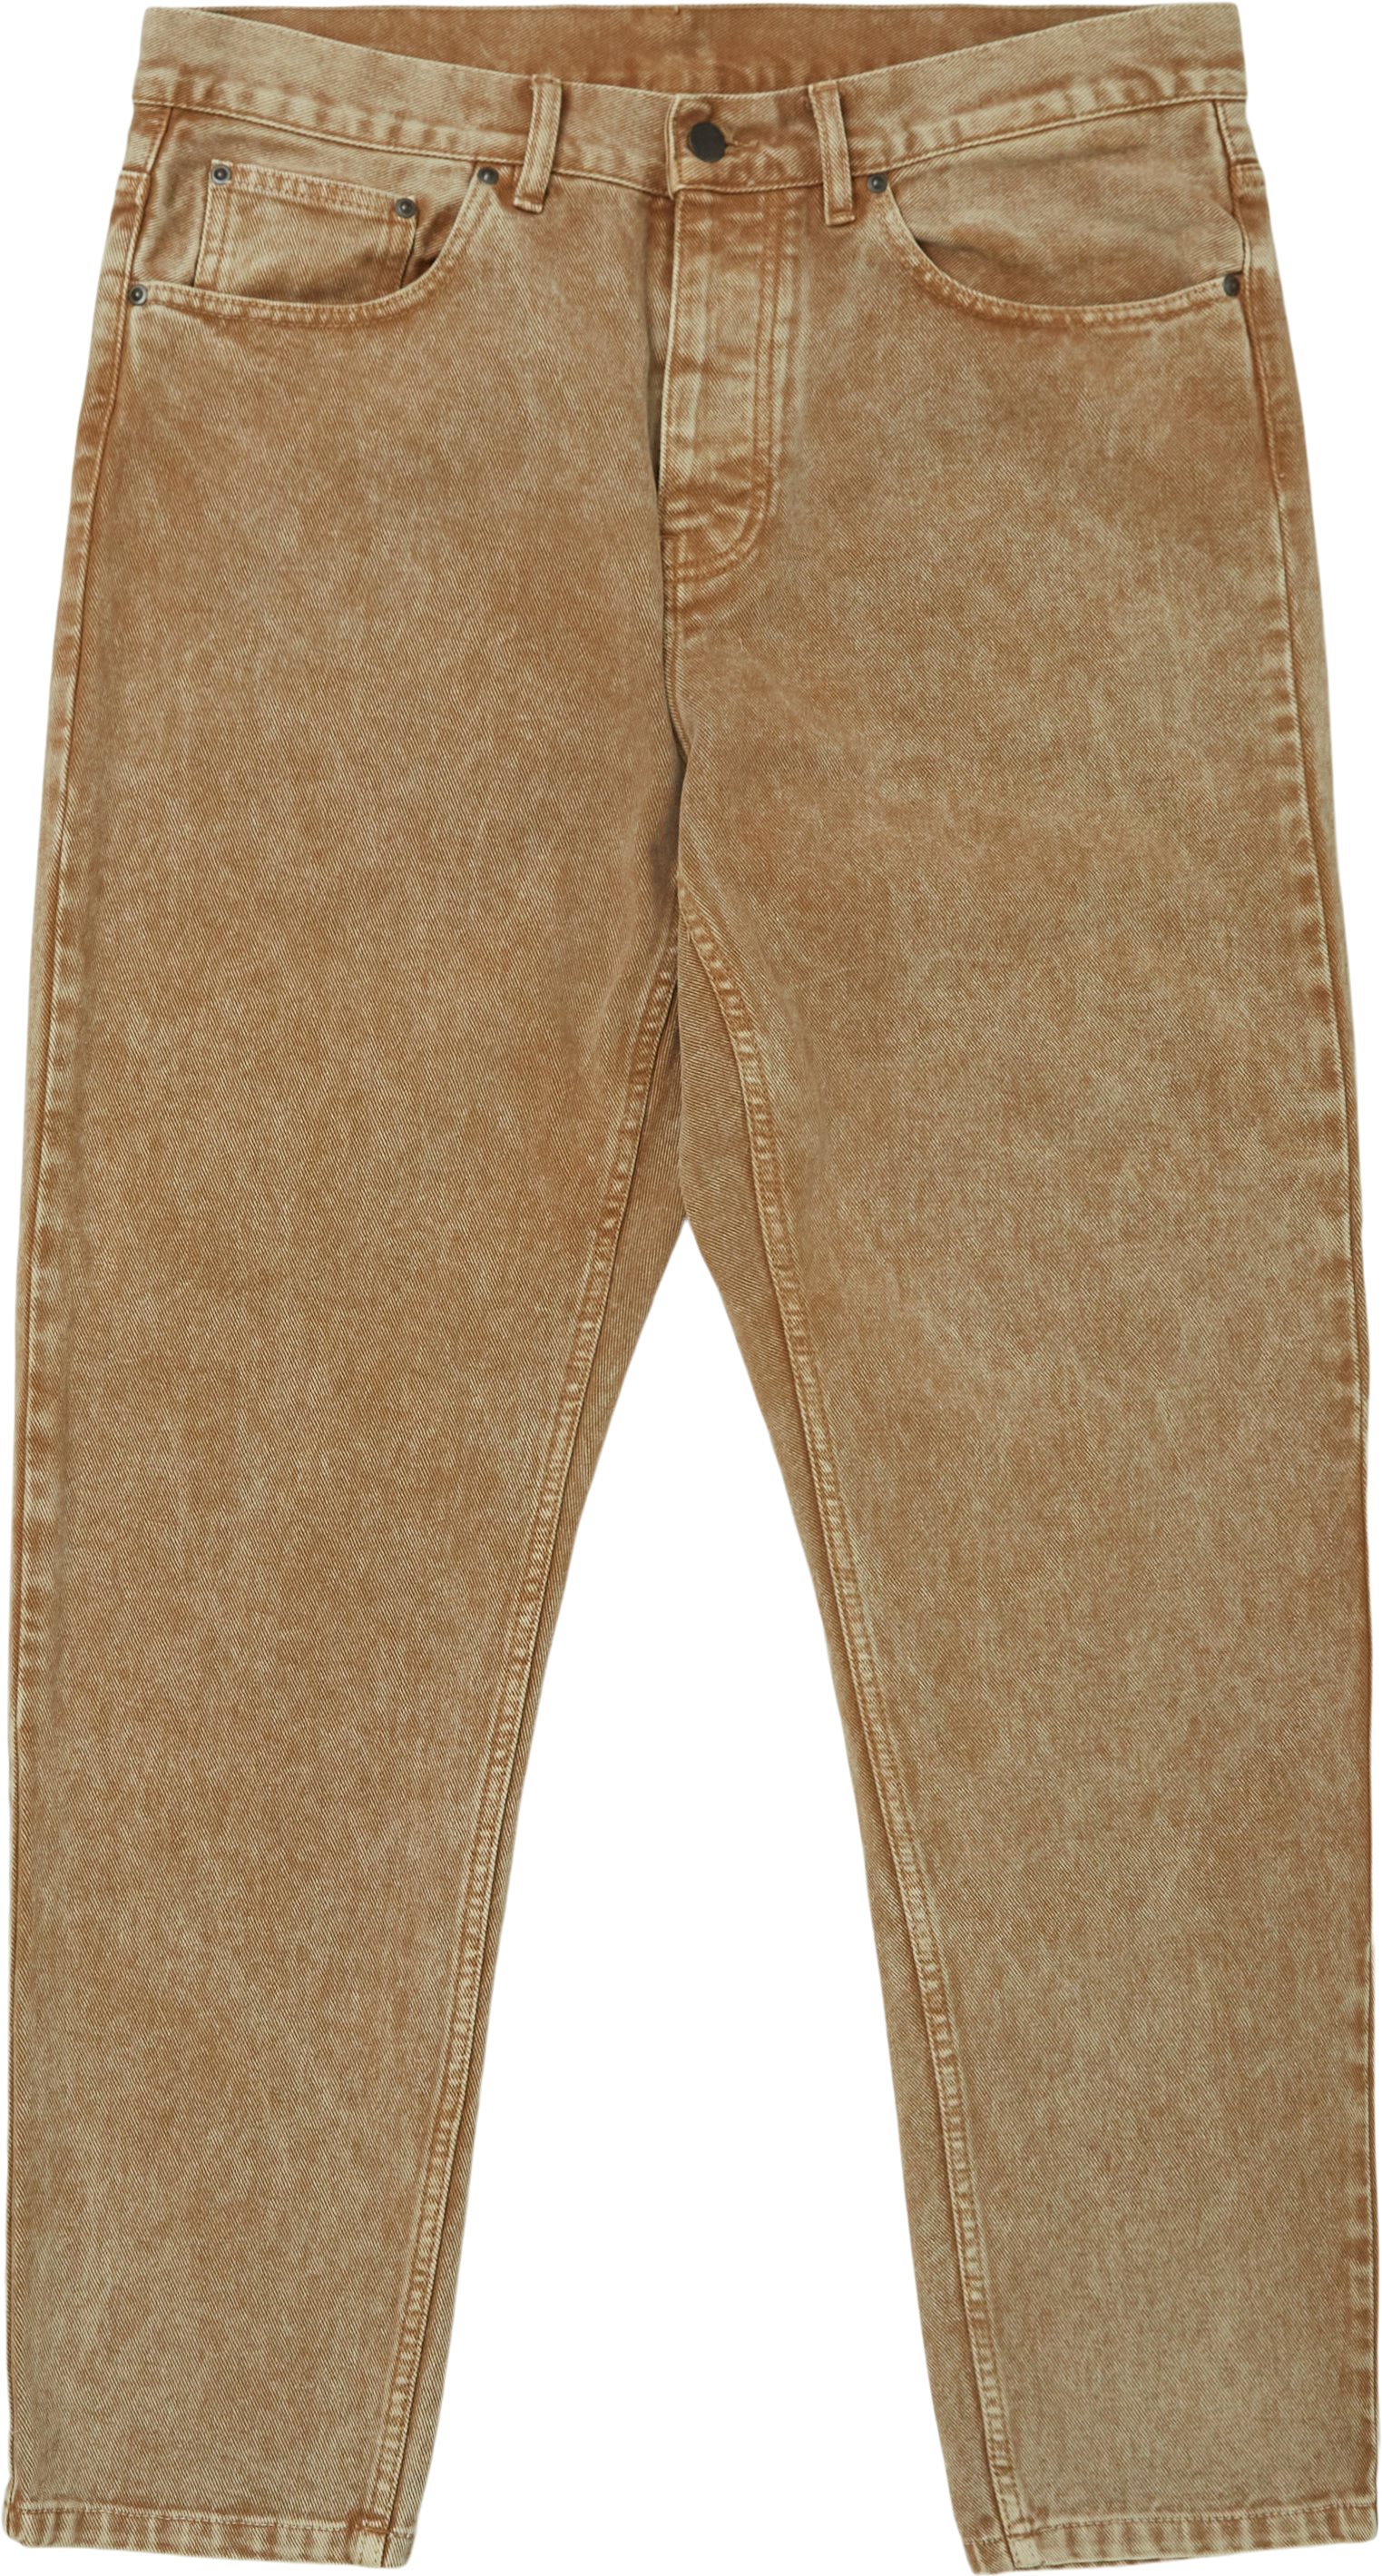 Carhartt WIP Jeans NEWEL I029148 Brown